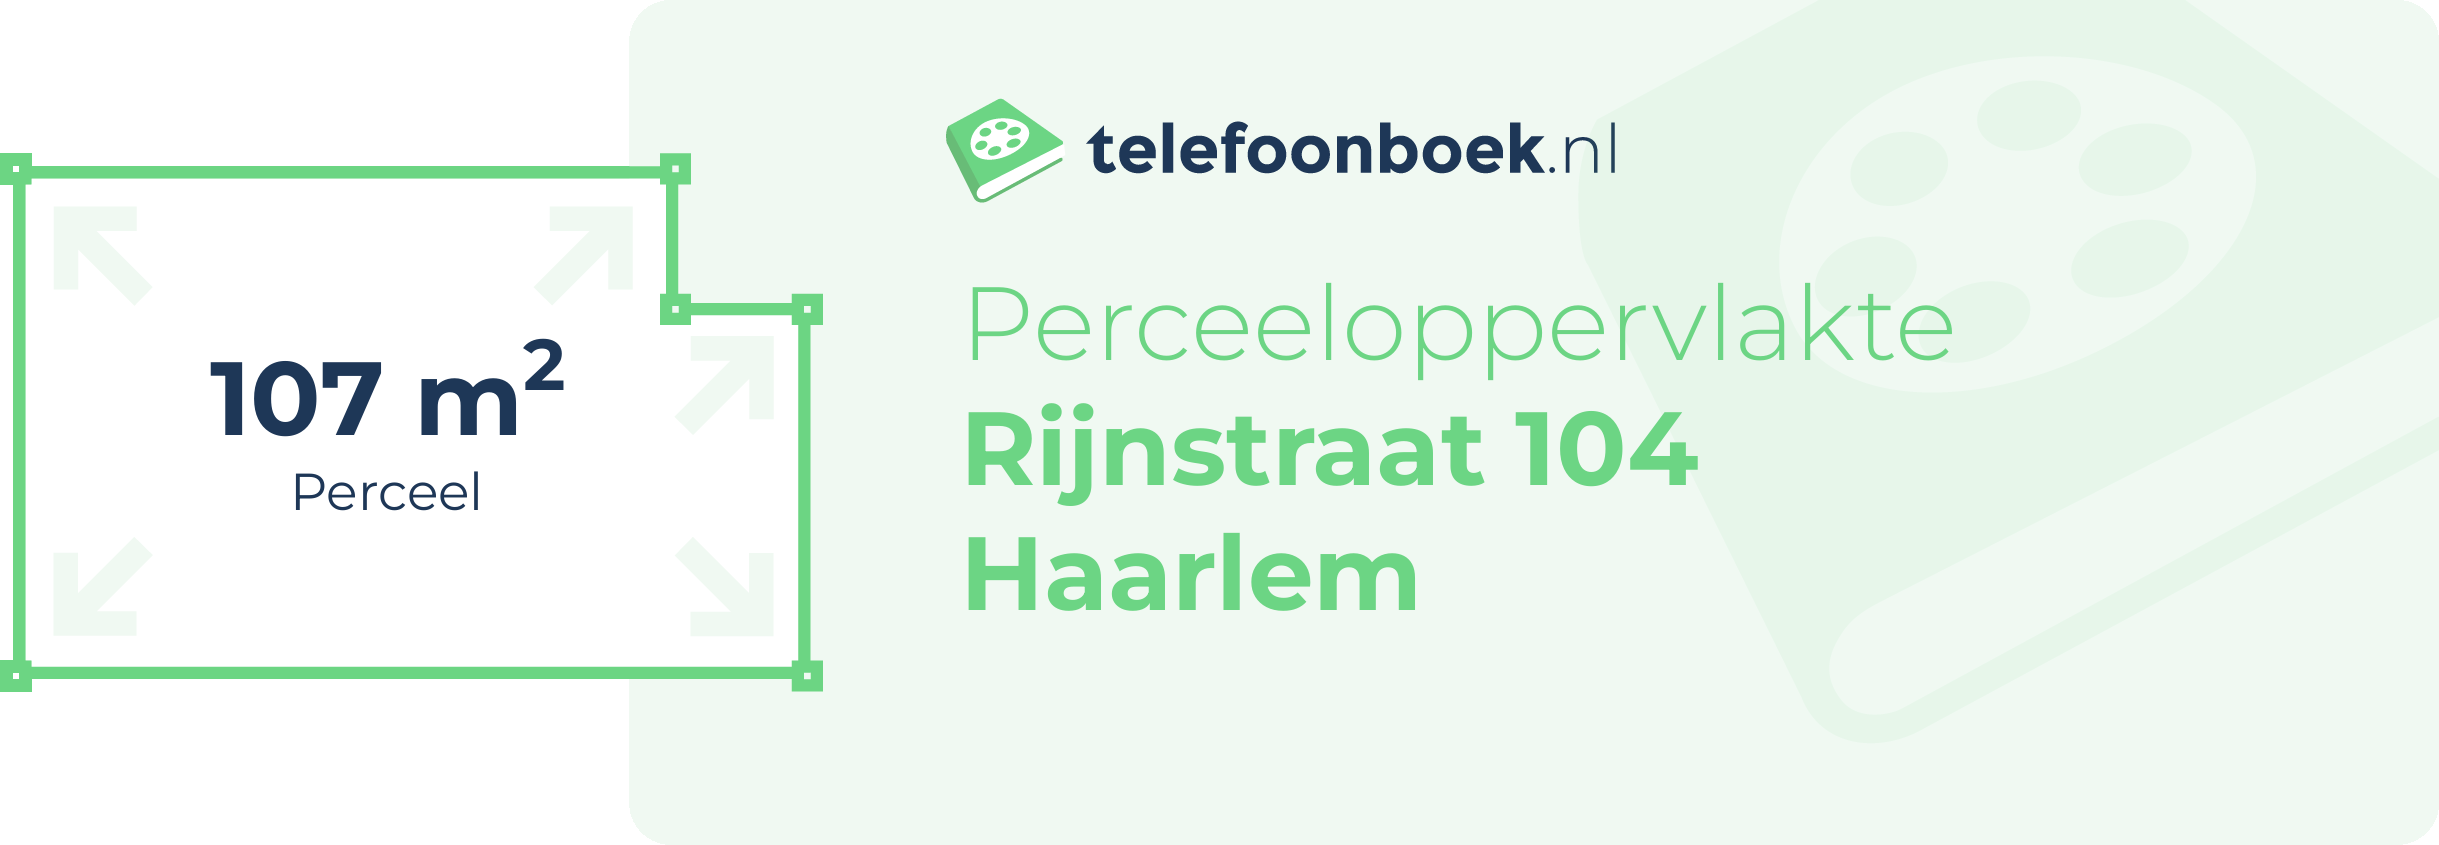 Perceeloppervlakte Rijnstraat 104 Haarlem